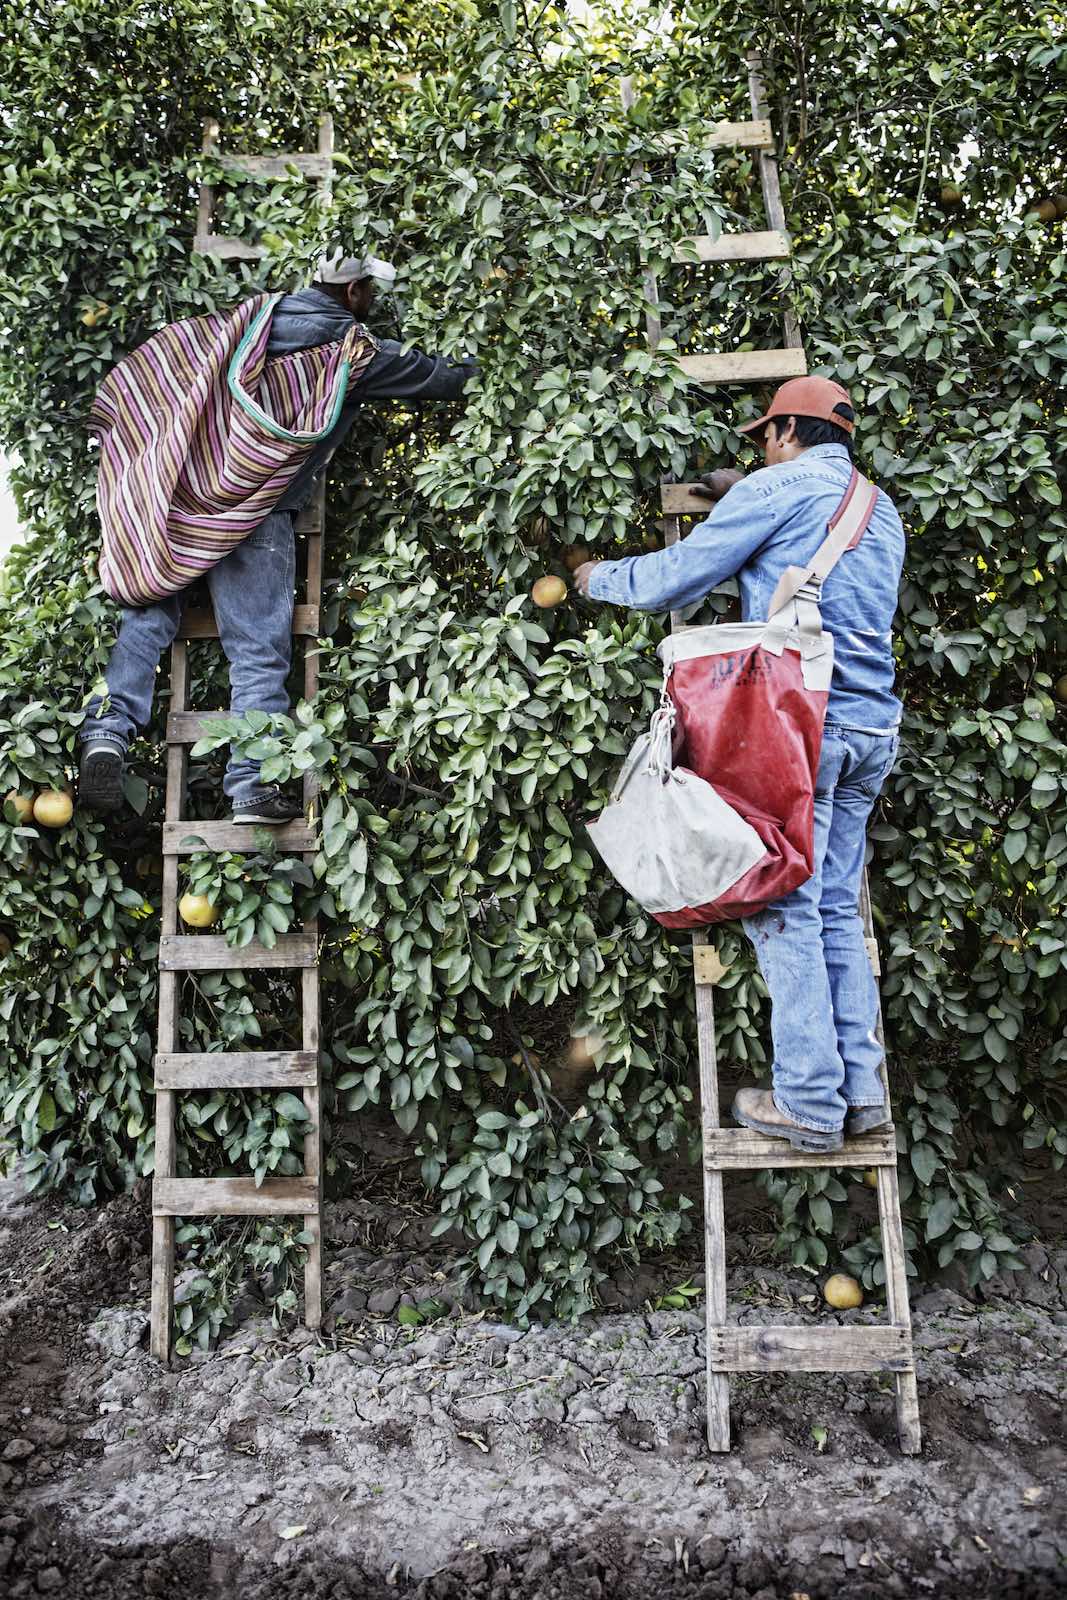 Jody Horton Photography - Grapefruit farmers picking grapefruits from wood ladders. 